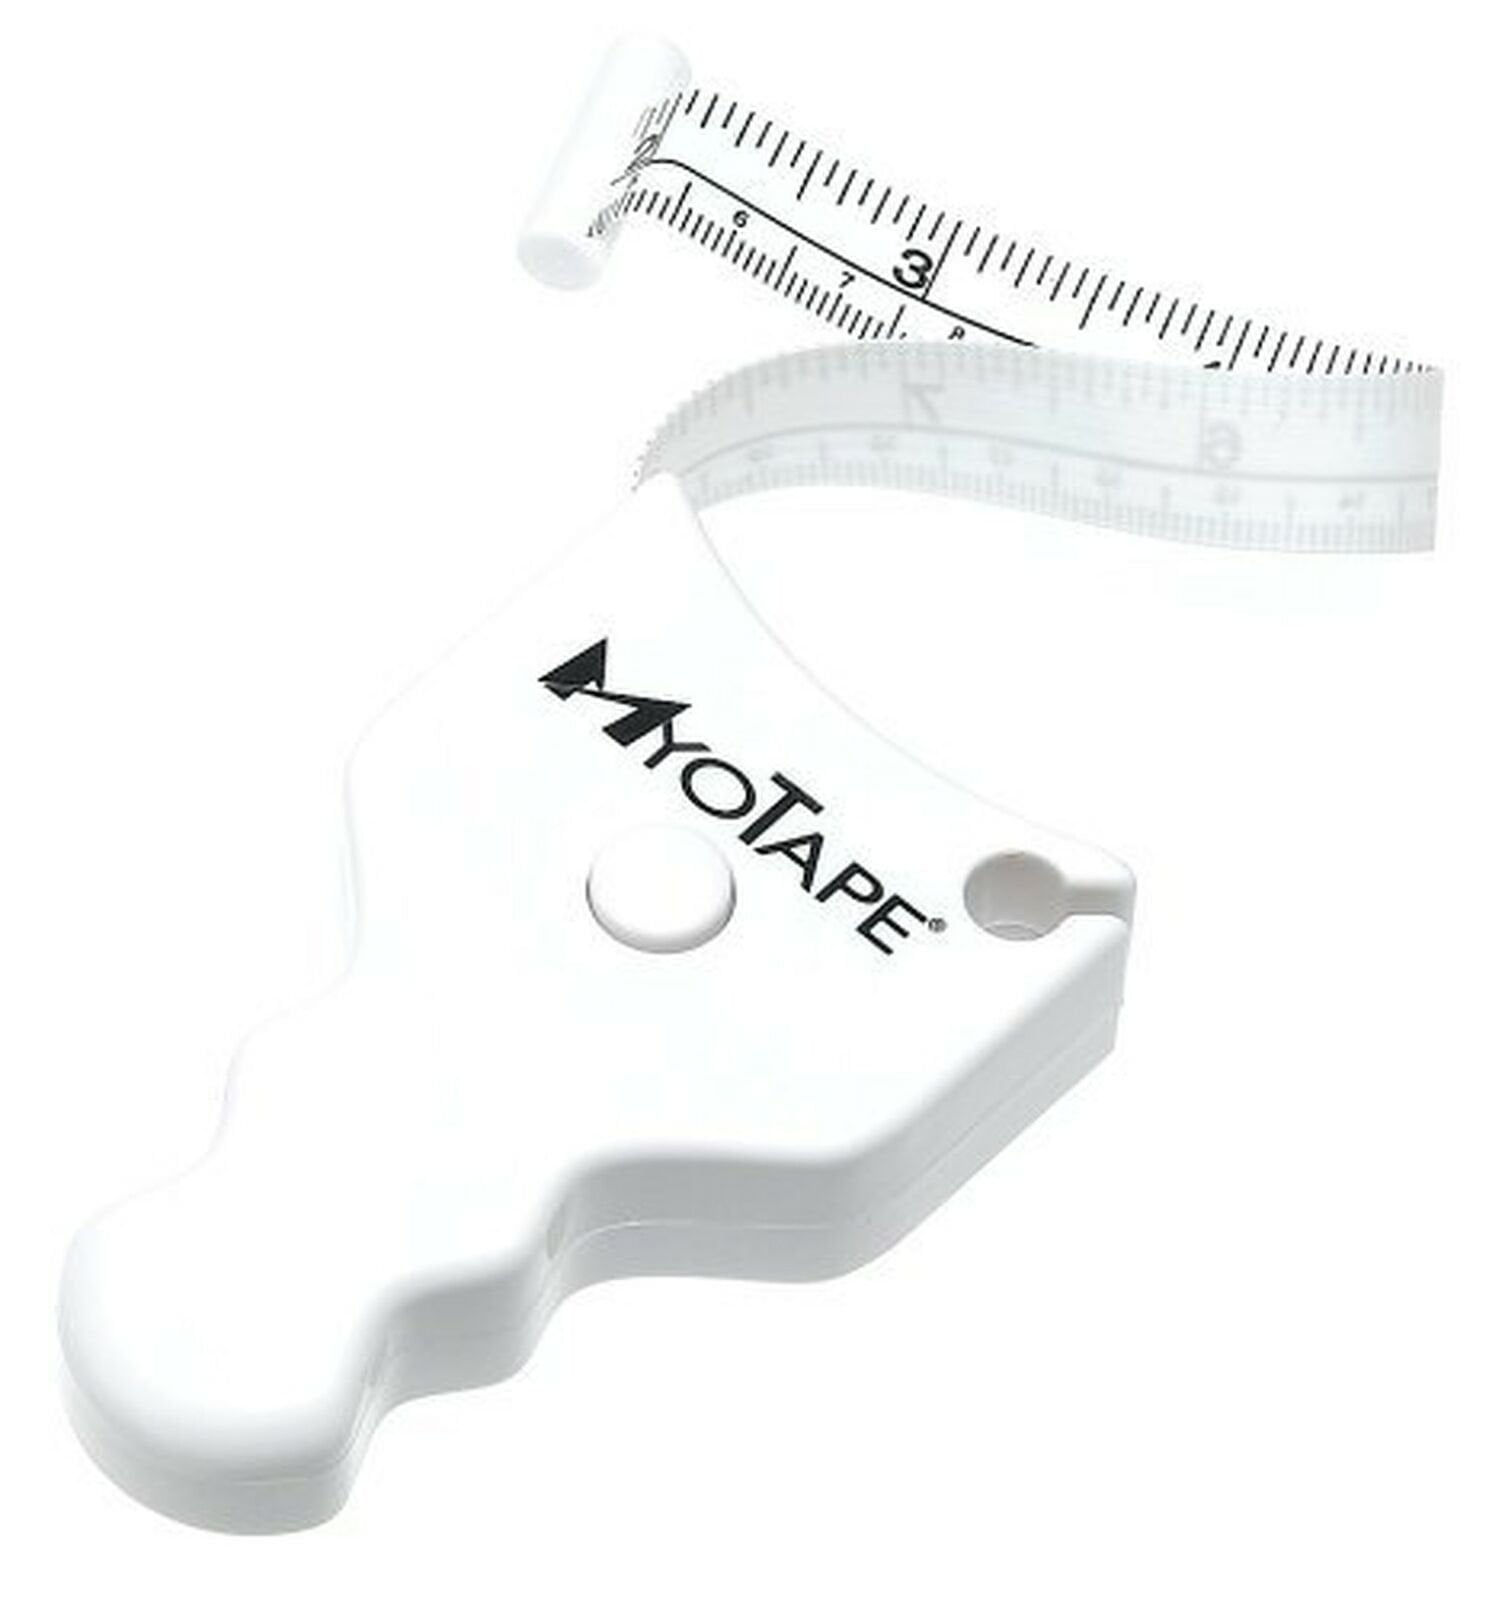 Buy Automatic Body Measuring Tape Online! – Kewlioo